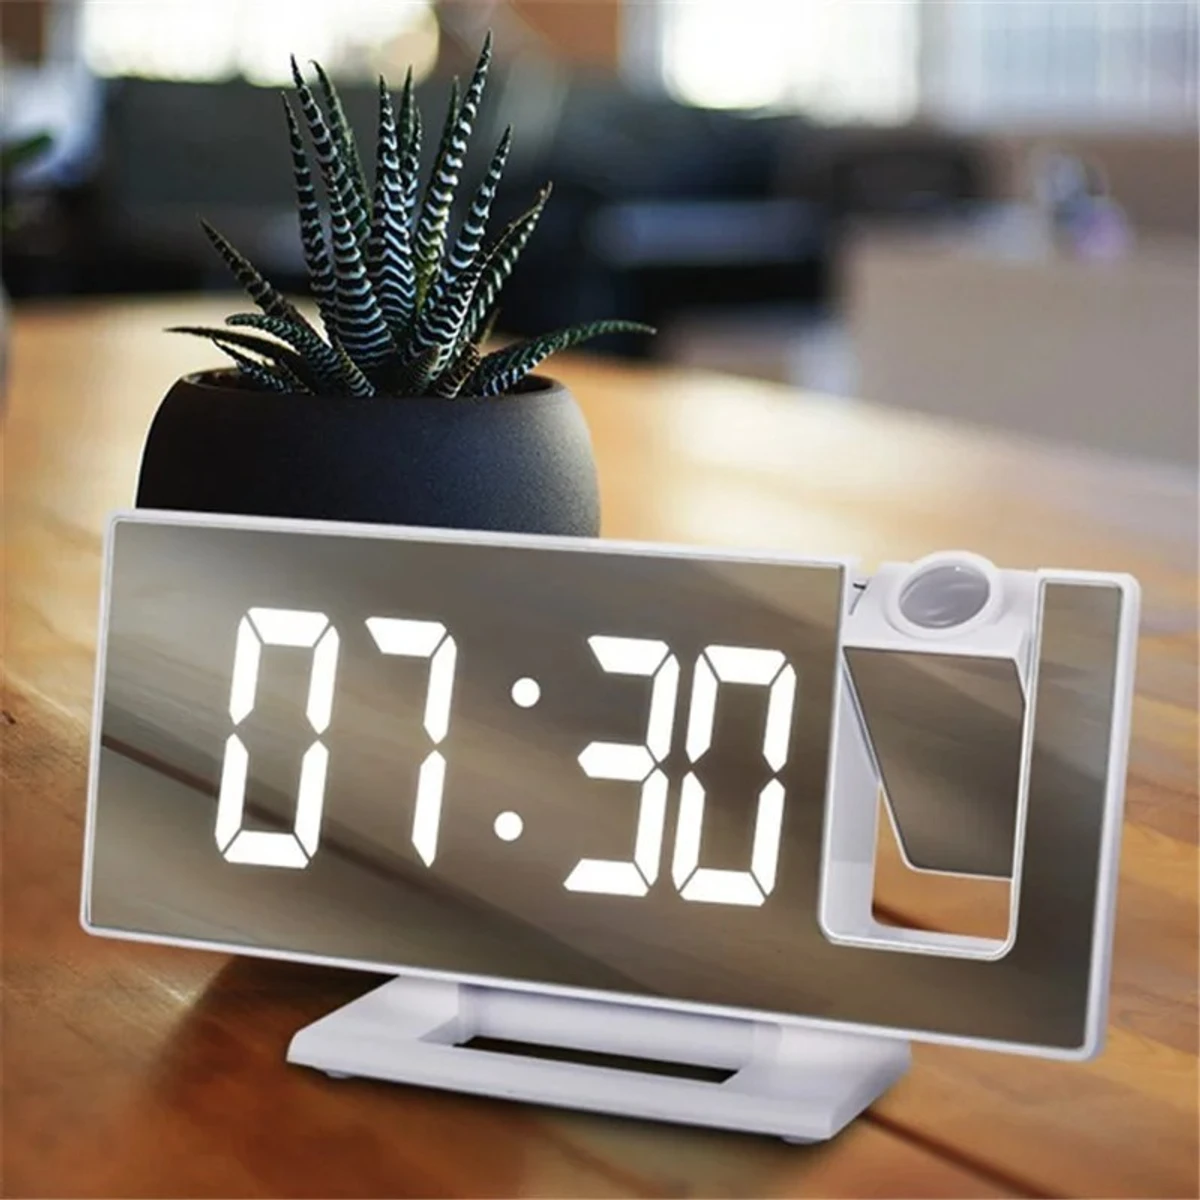 Digital Alarm Clock LED Large Mirror Display 180 ° Rotating Projector Electronic Clock